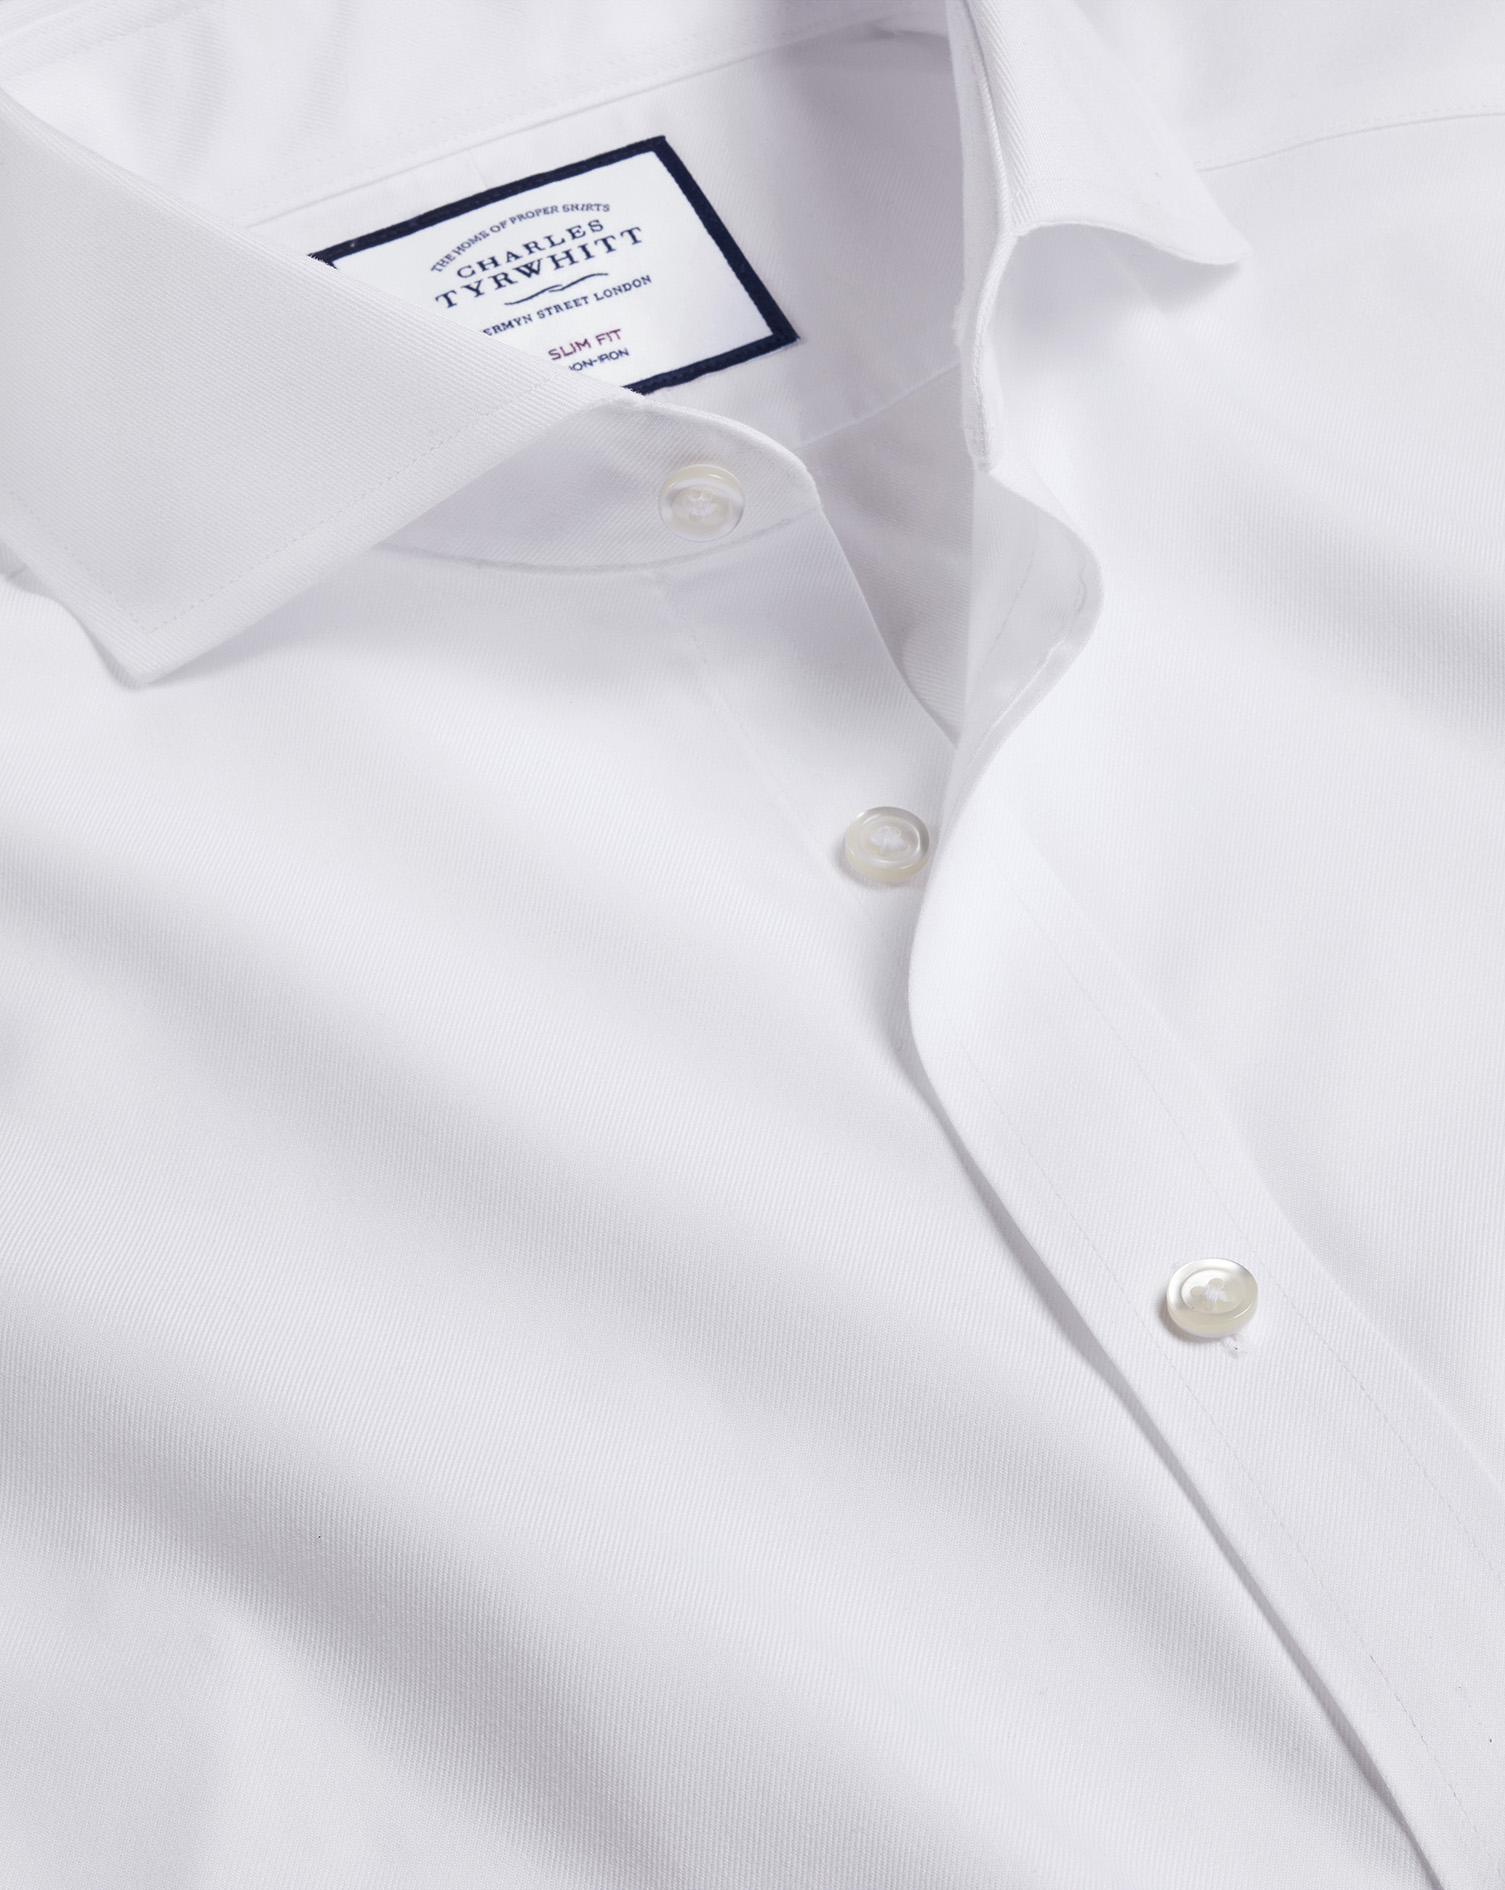 Men's Charles Tyrwhitt Extreme Cutaway Collar Non-Iron Twill Dress Shirt - White French Cuff Size XL